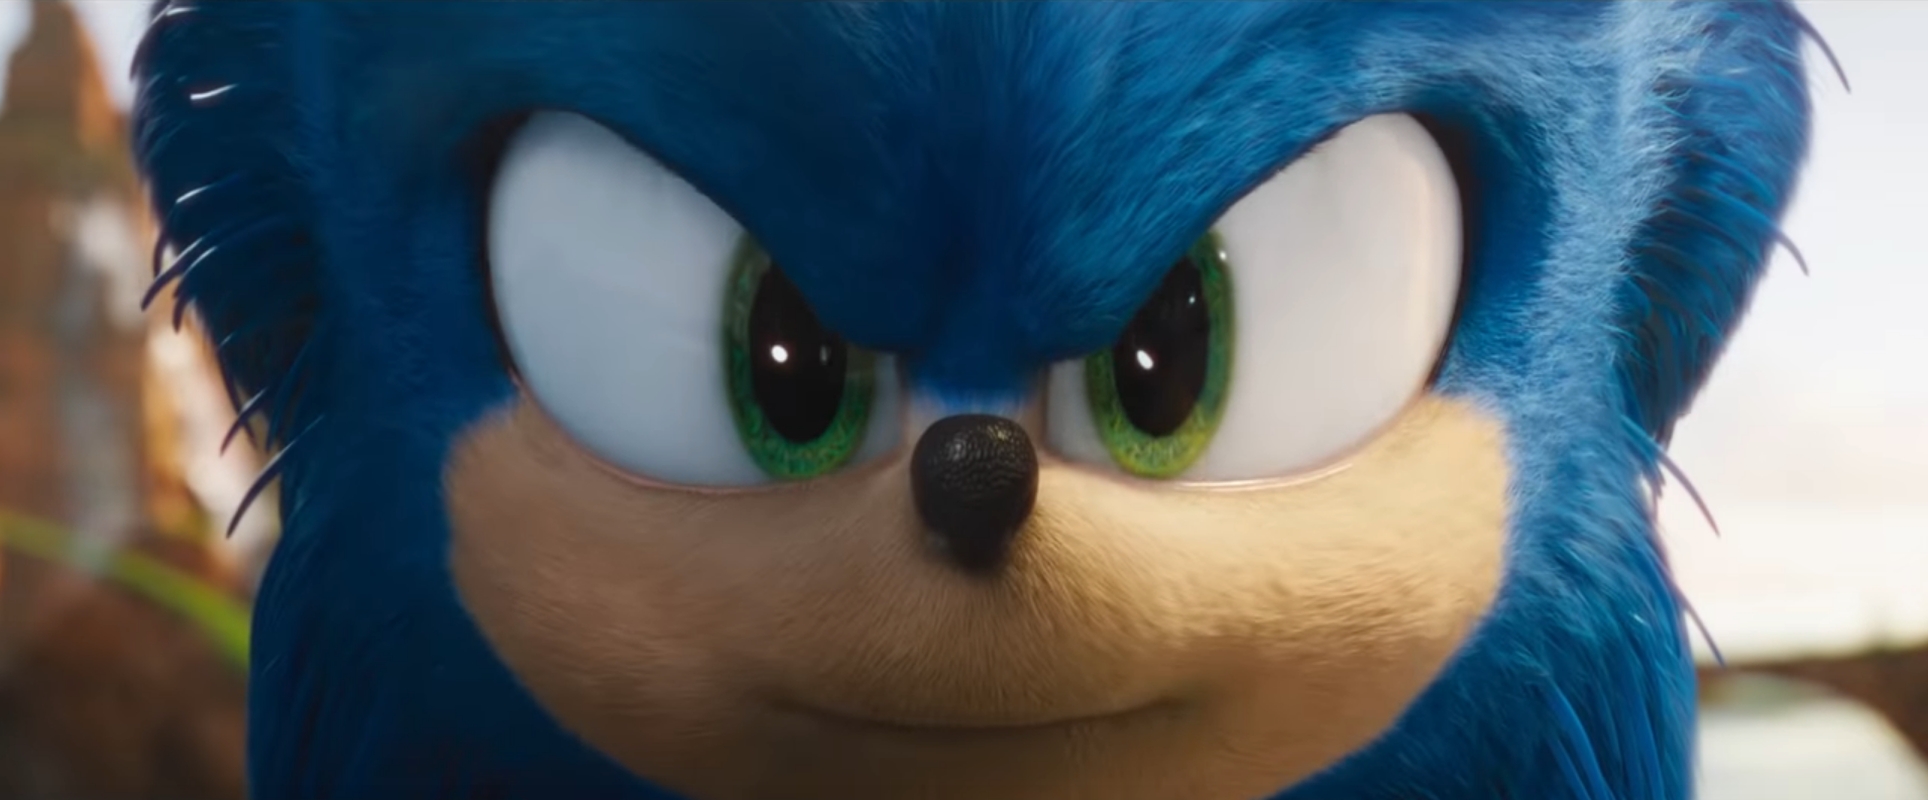 Yuji Naka Expresses His Feelings On New Sonic the Hedgehog Movie Redesign